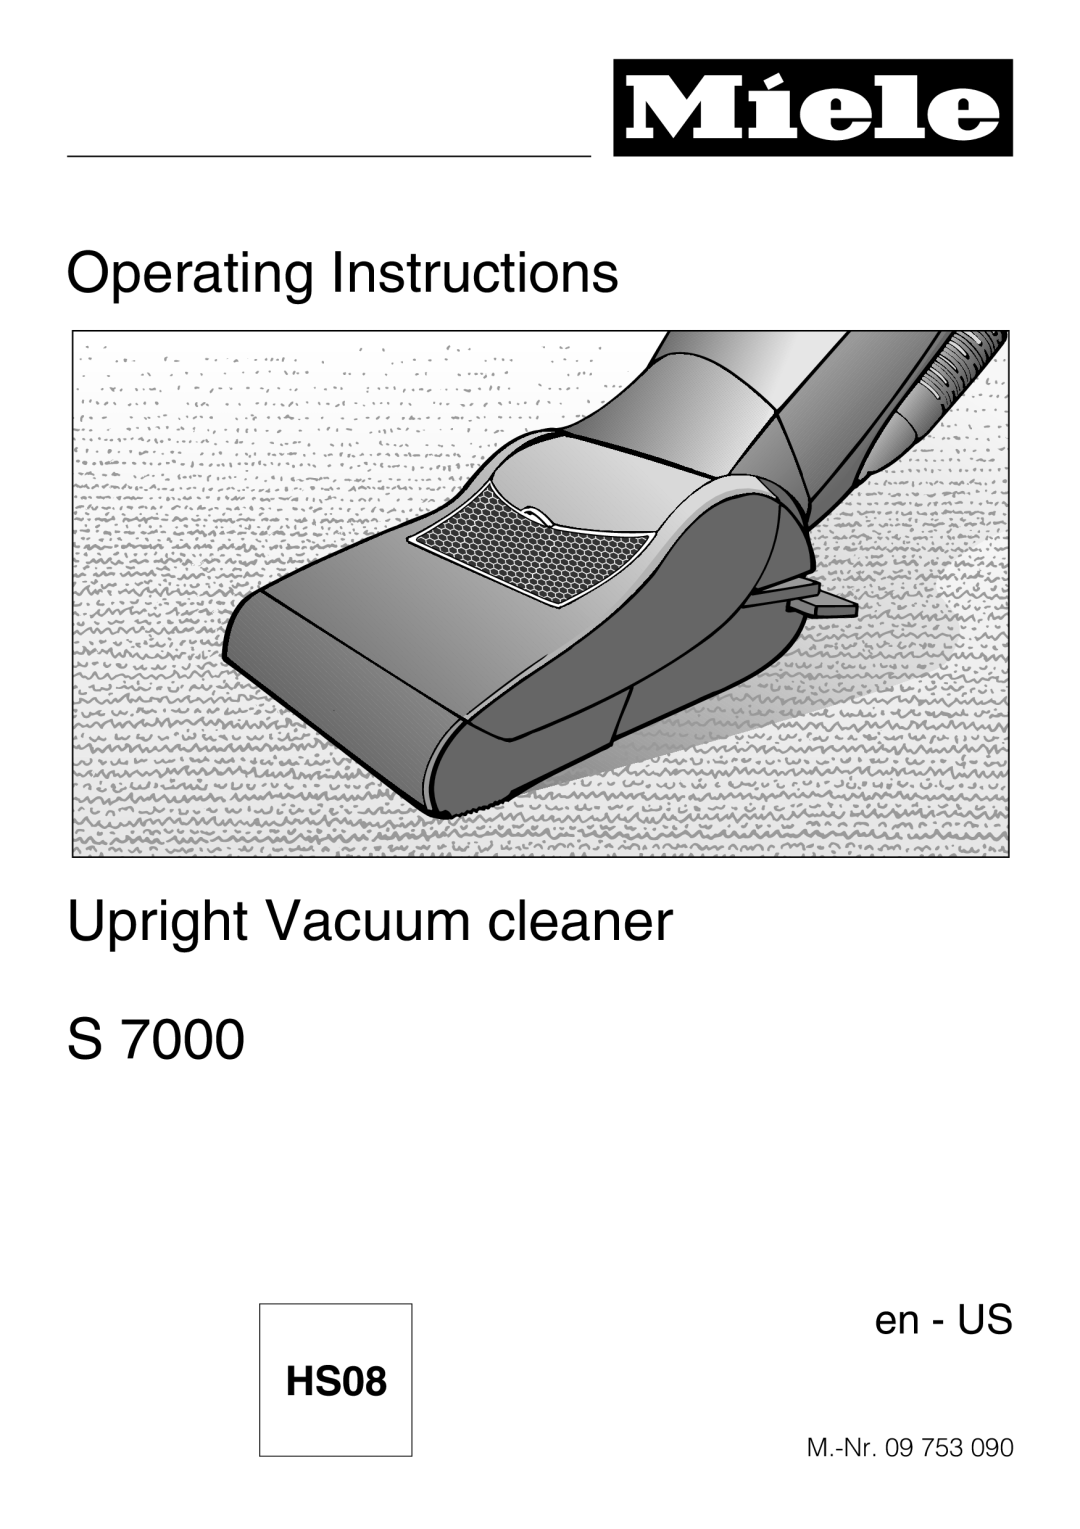 Miele HS08 manual Operating Instructions, Upright Vacuum Cleaner Dynamic U1, en - US 